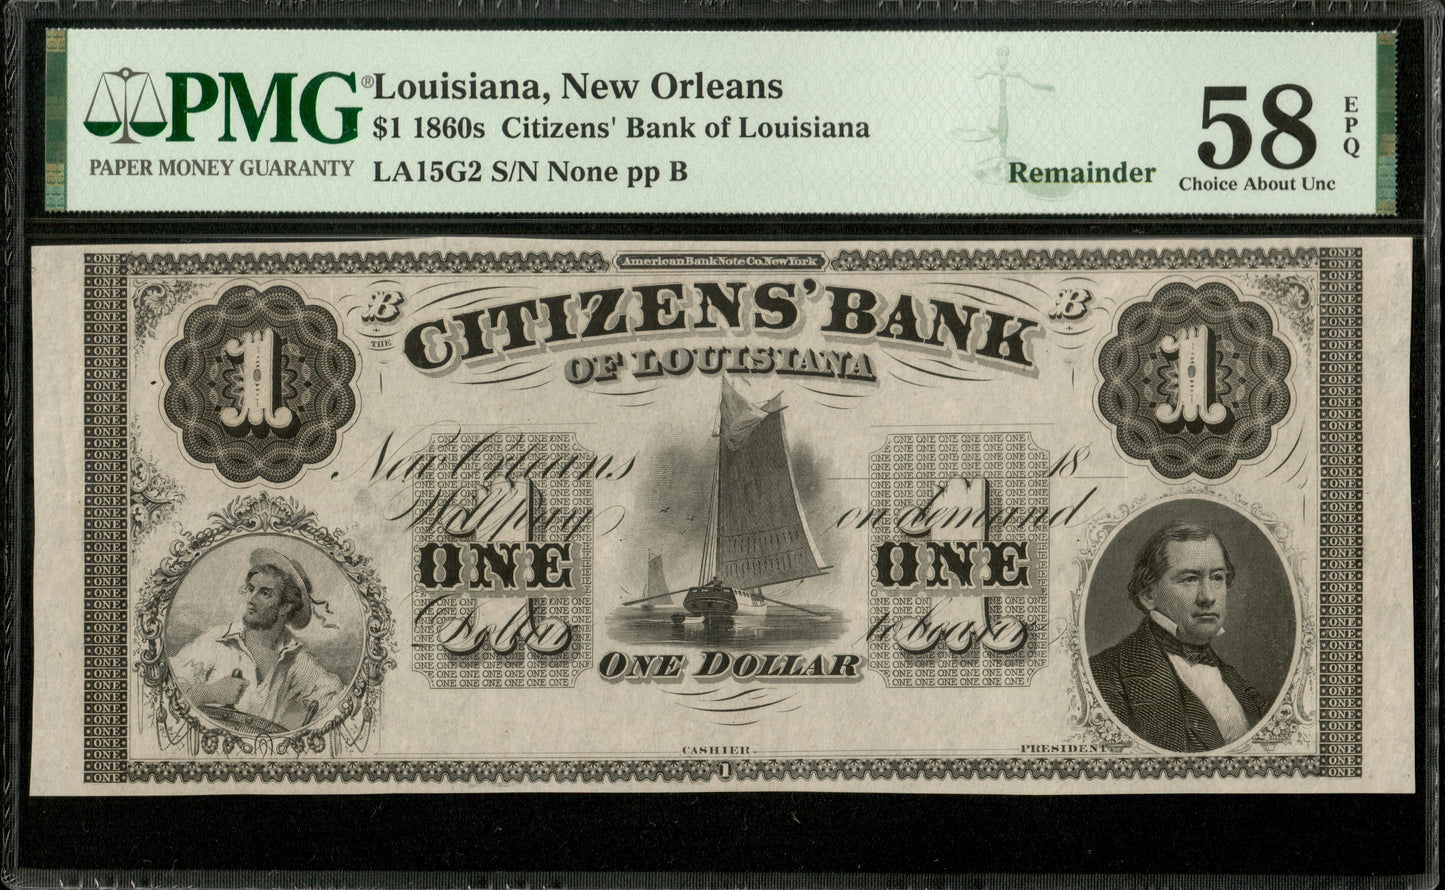 USA - Citizens' Bank of Louisiana New Orleans, 1 Dollar $1 1860s Remainder NEUF / PMG 58 EPQ